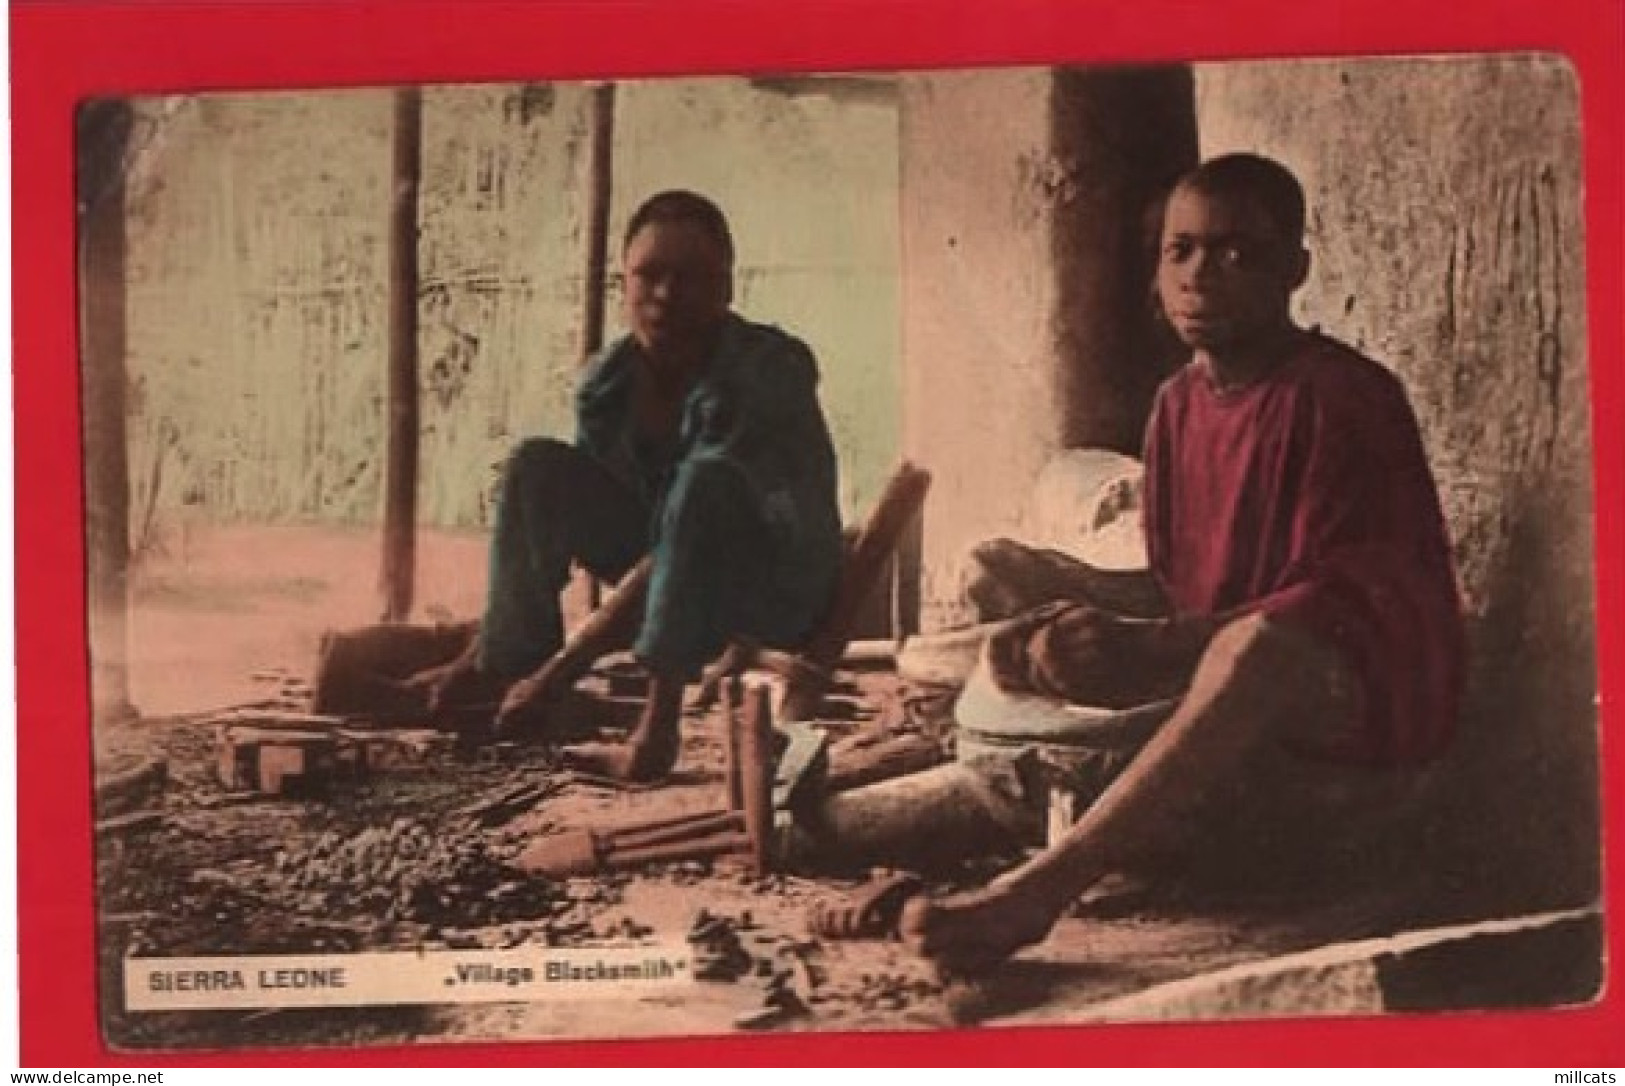 SERRA LEONE    VILLAGE BLACKSMITH    ETHNIC  Pu 1914 - Sierra Leone